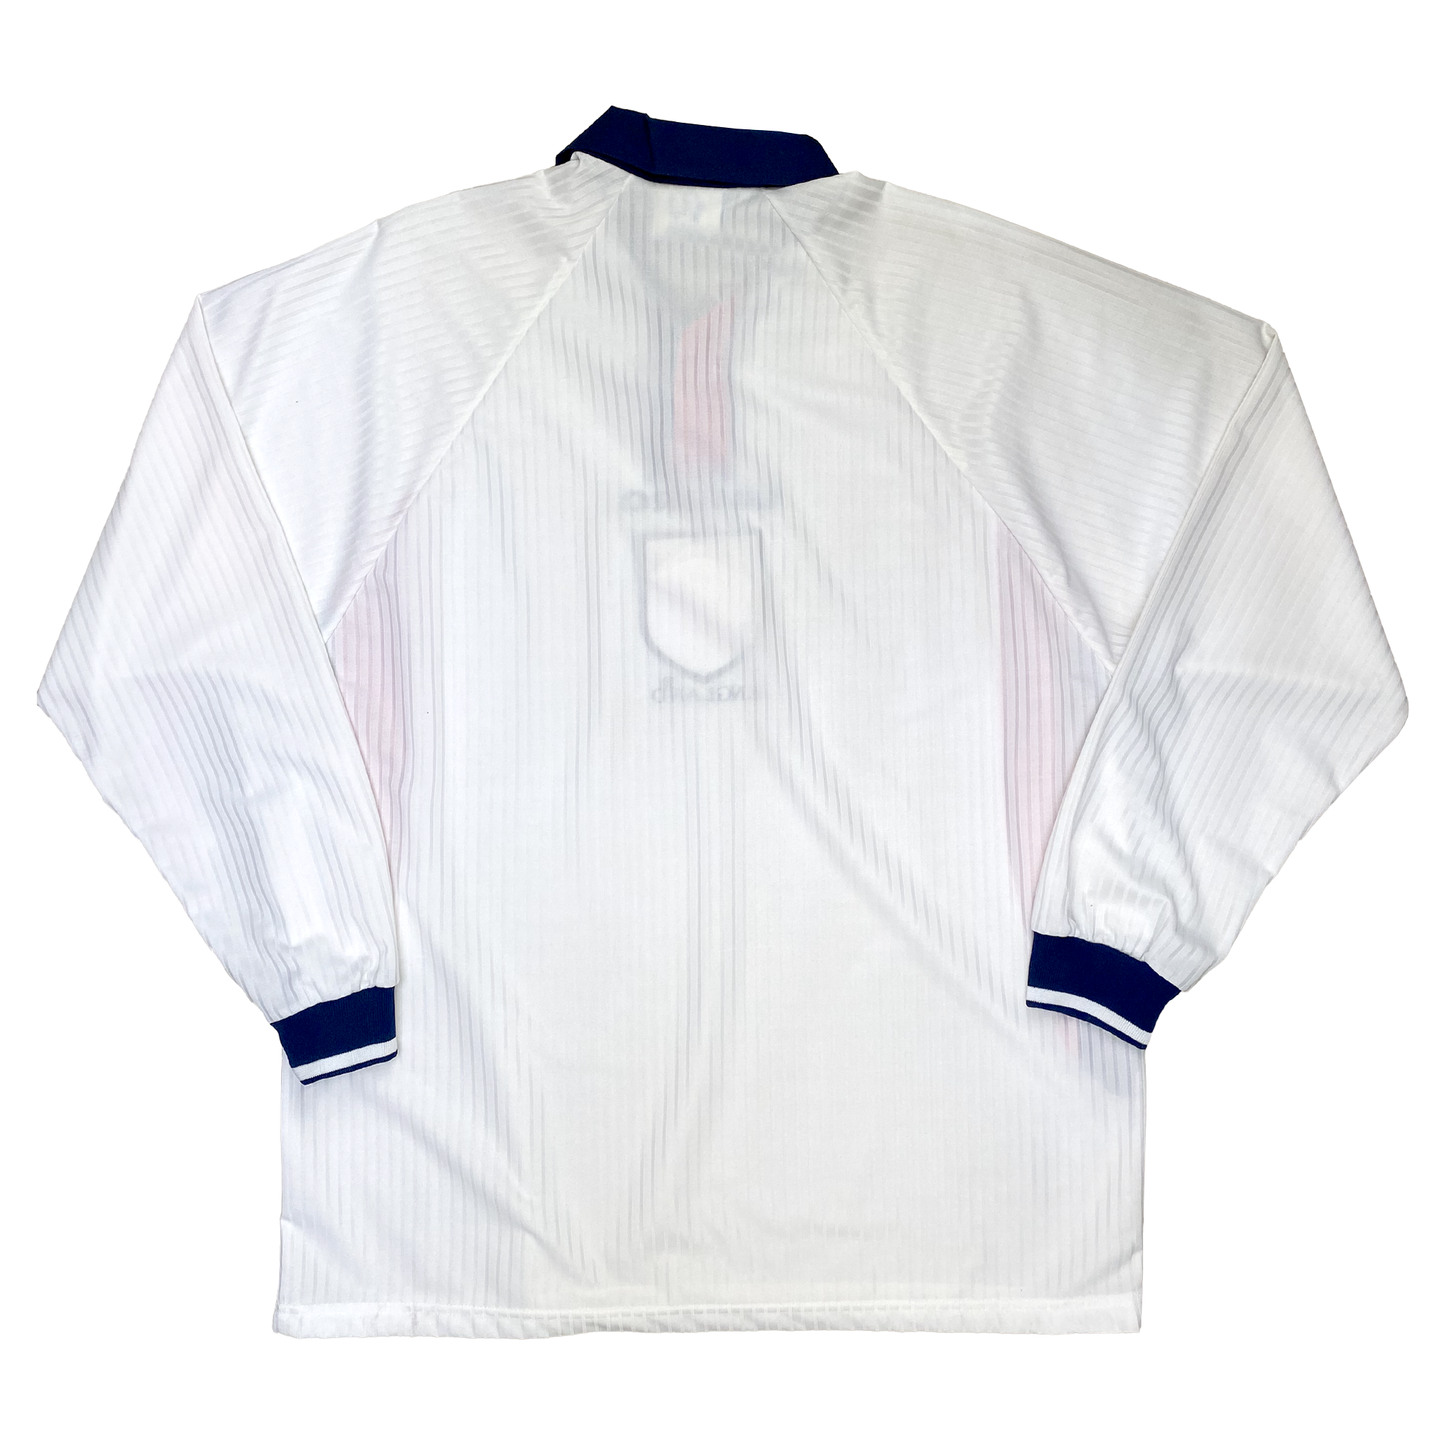 England Home Shirt Long Sleeve (1998) | Extra Large